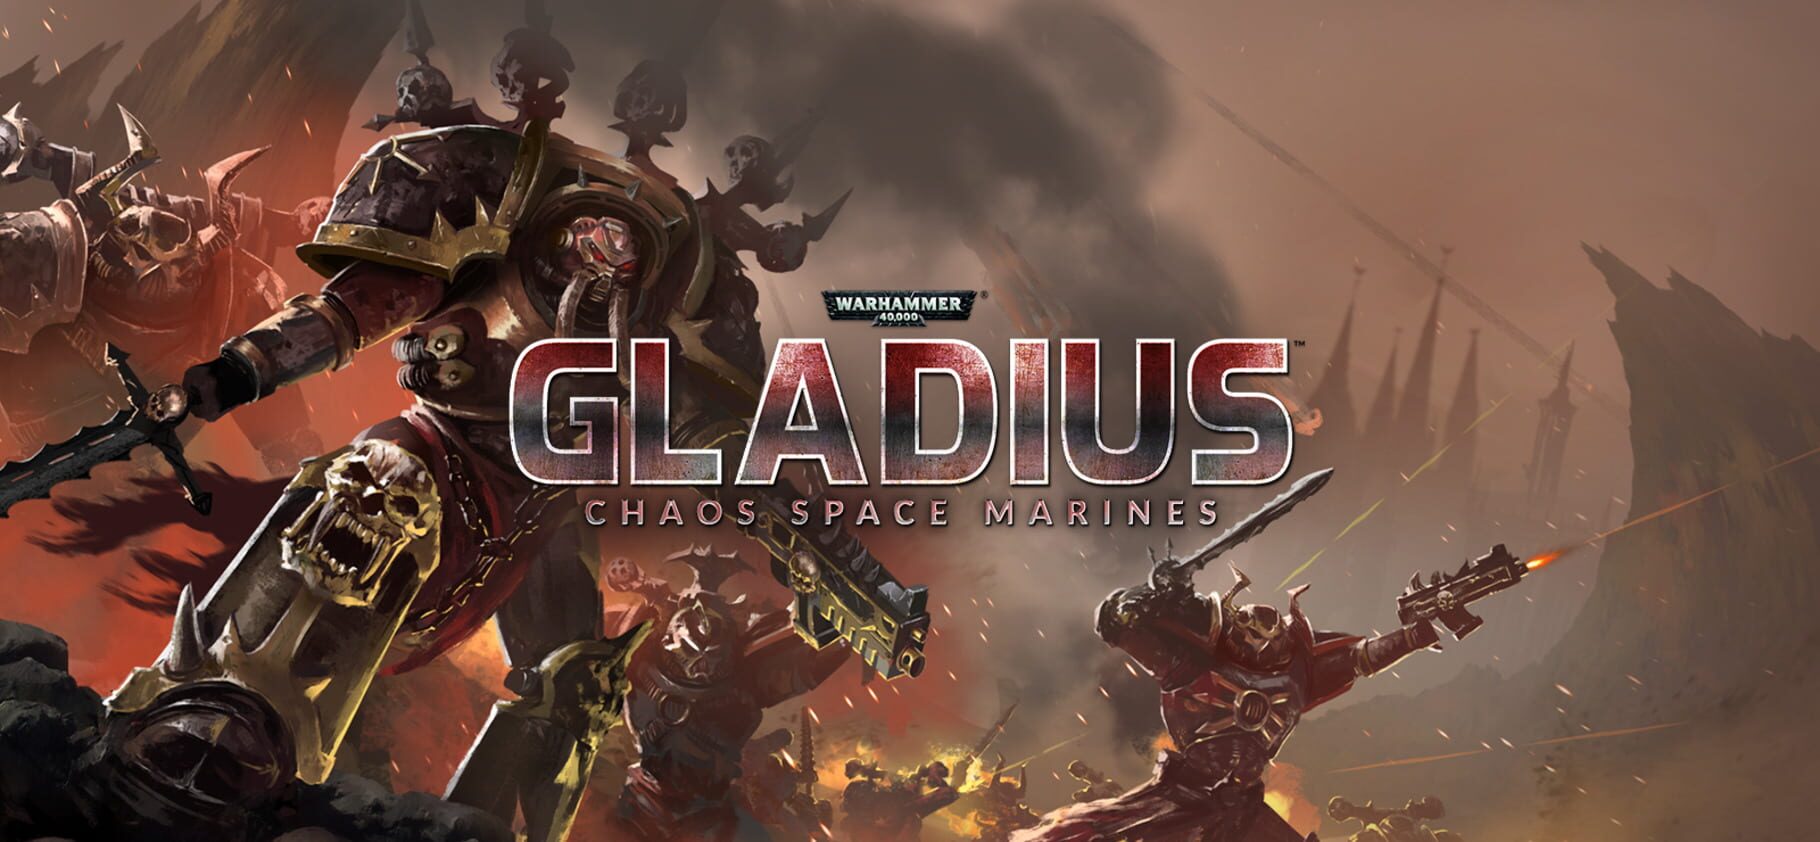 Arte - Warhammer 40,000: Gladius - Relics of War: Chaos Space Marines